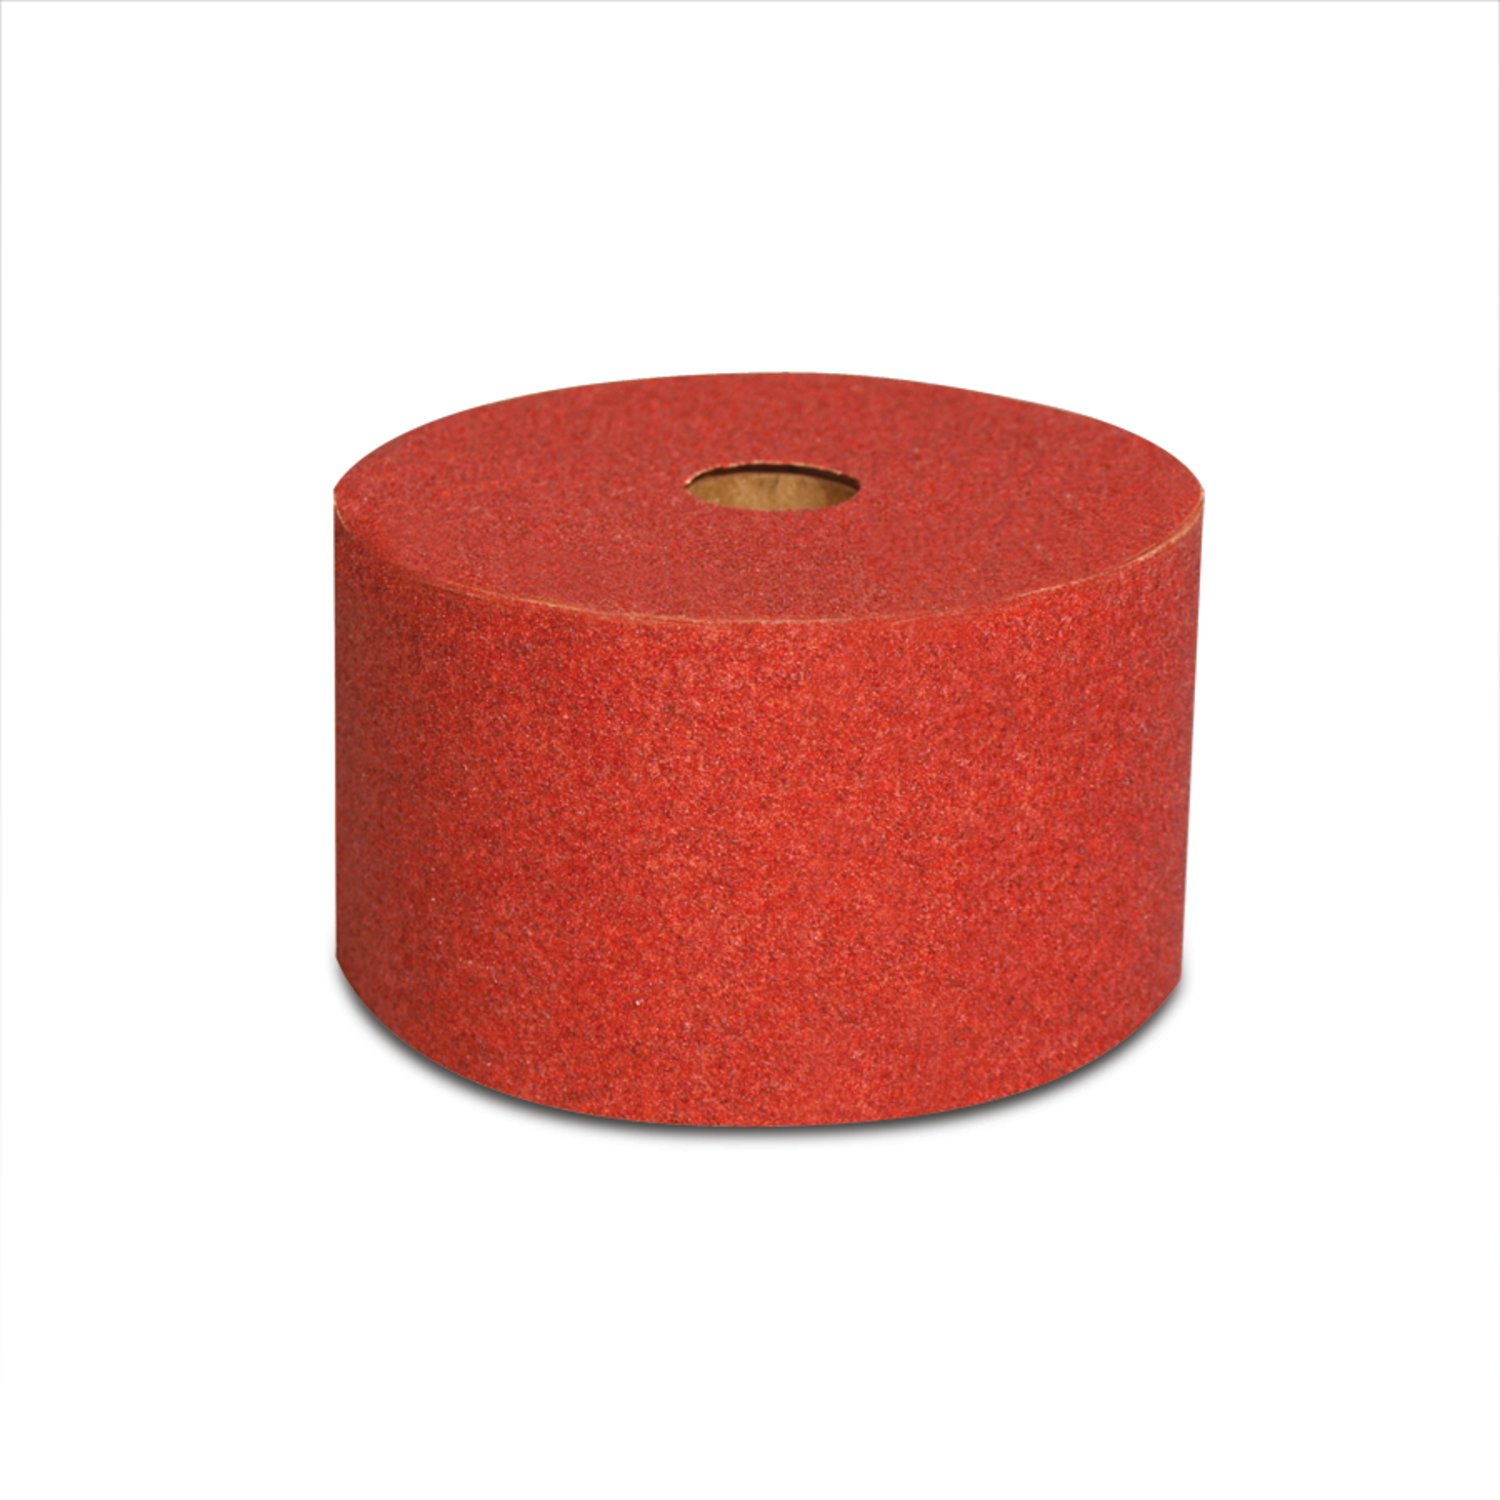 7000119929 - 3M Red Abrasive Stikit Sheet Roll, 01686, P150, 2-3/4 in x 25 yd, 6
rolls per case